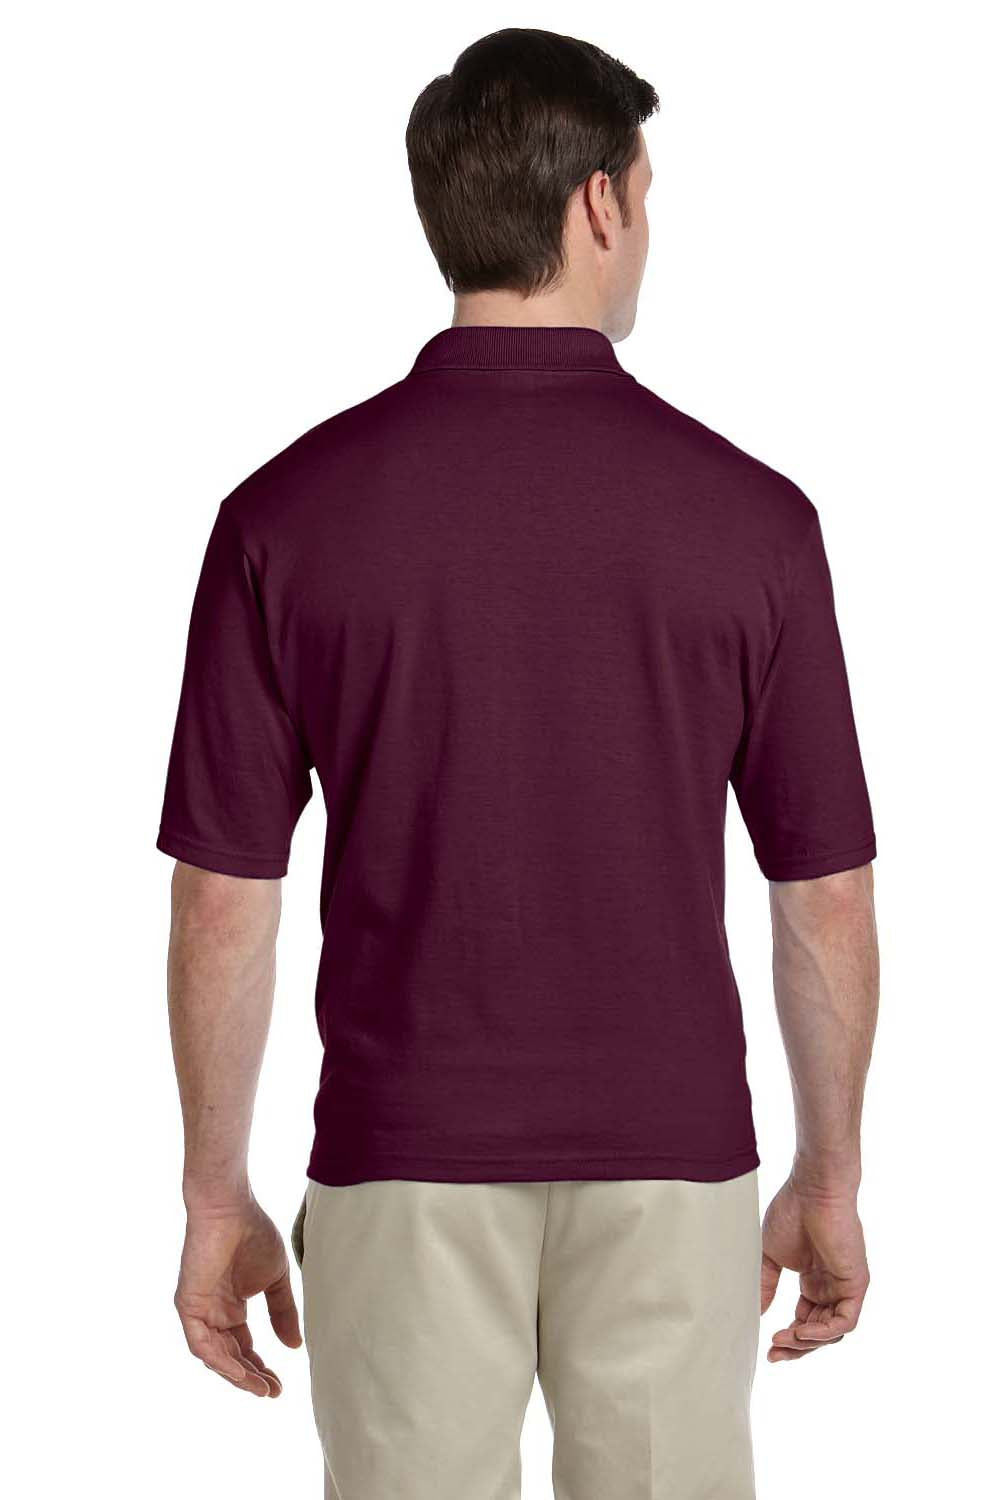 Jerzees 436P Mens SpotShield Stain Resistant Short Sleeve Polo Shirt w/ Pocket Maroon Back